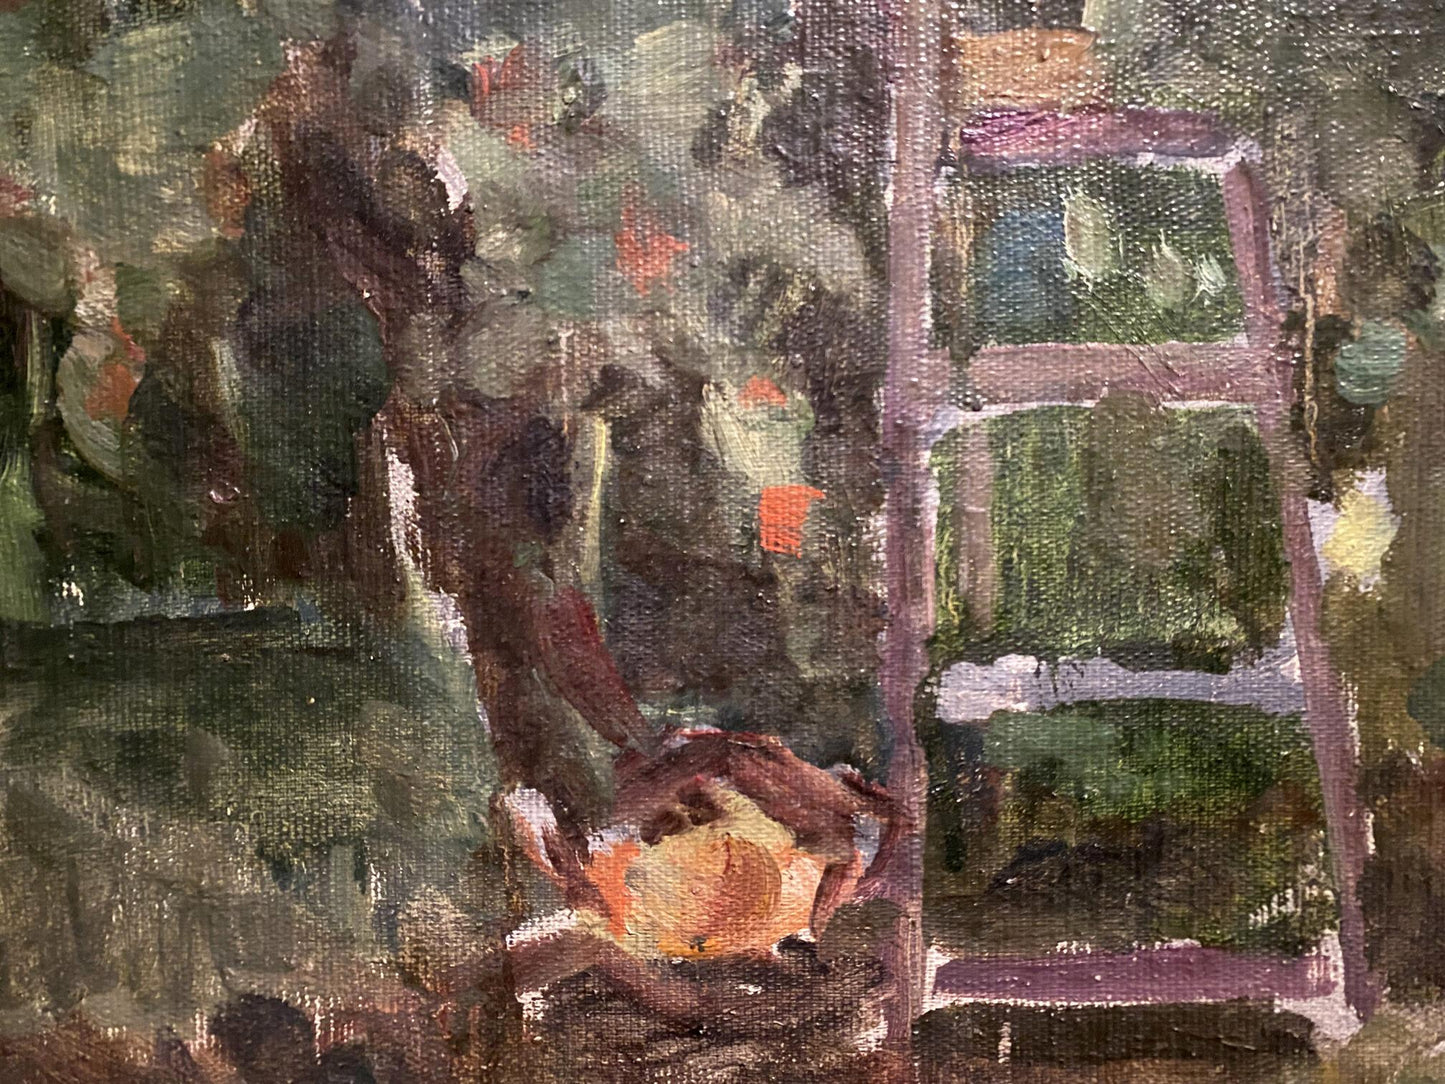 In the Garden depicted in oil paint